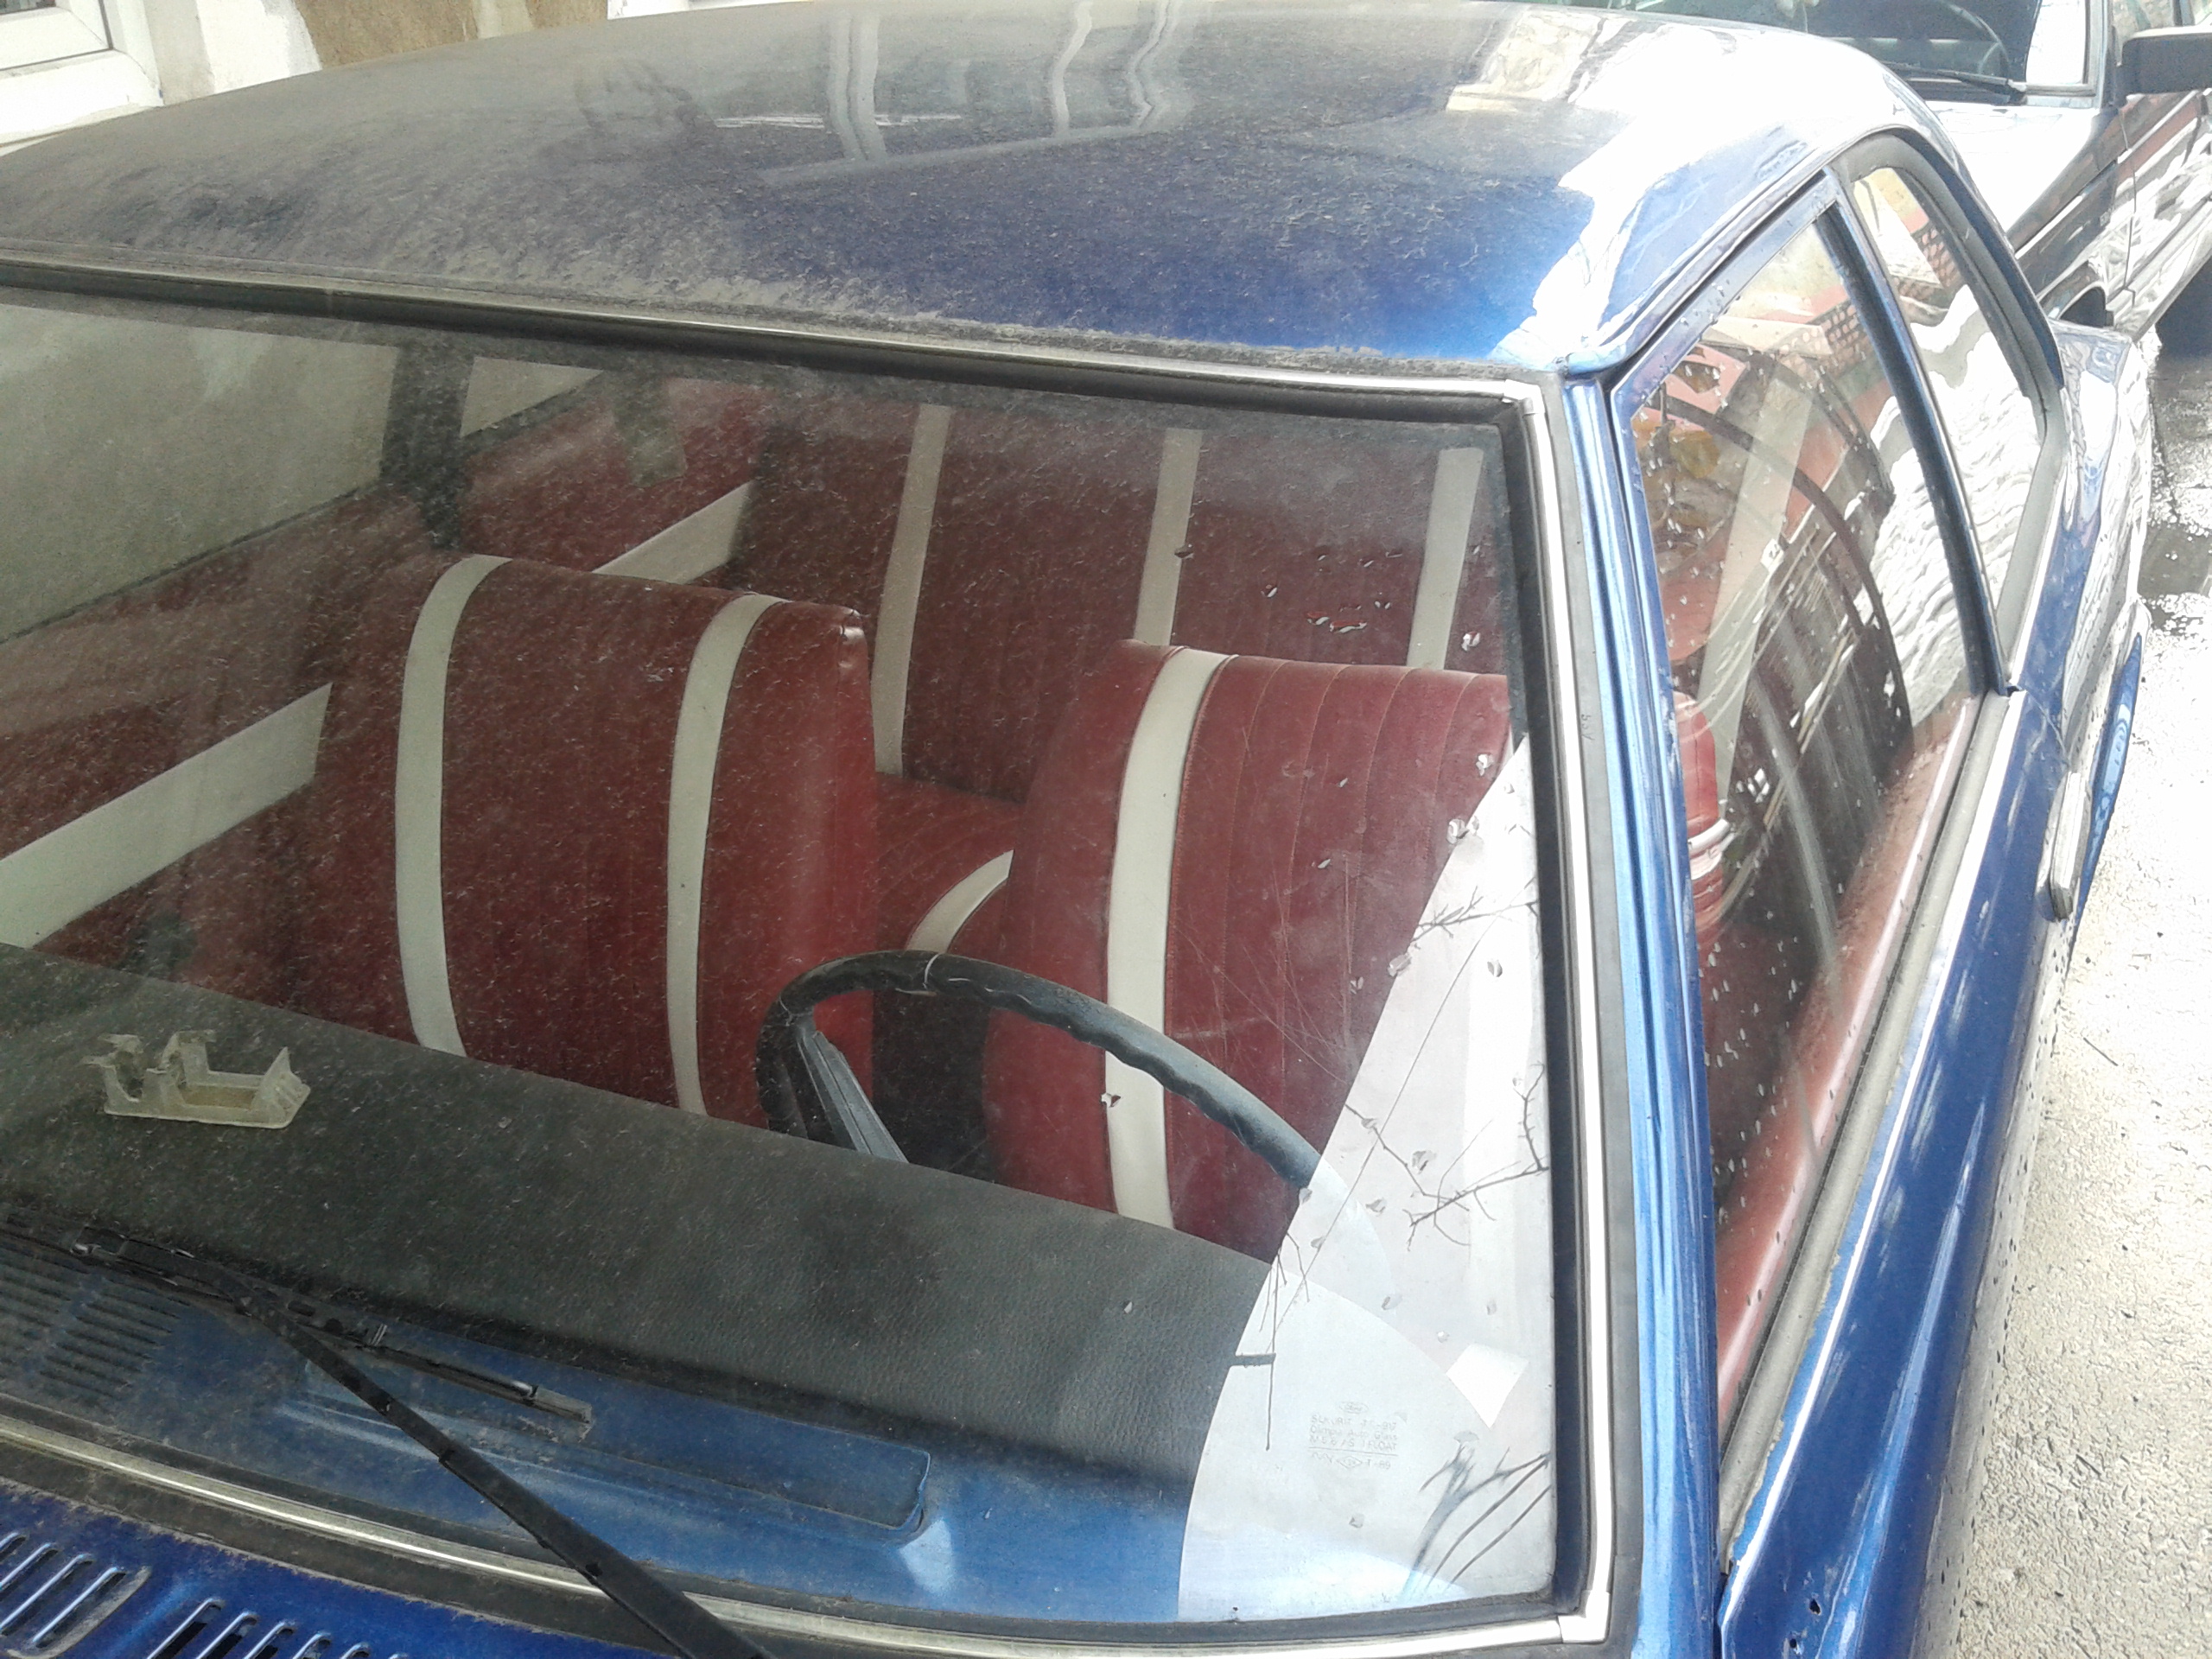  1973 taunus gxl coupe metalik mavi